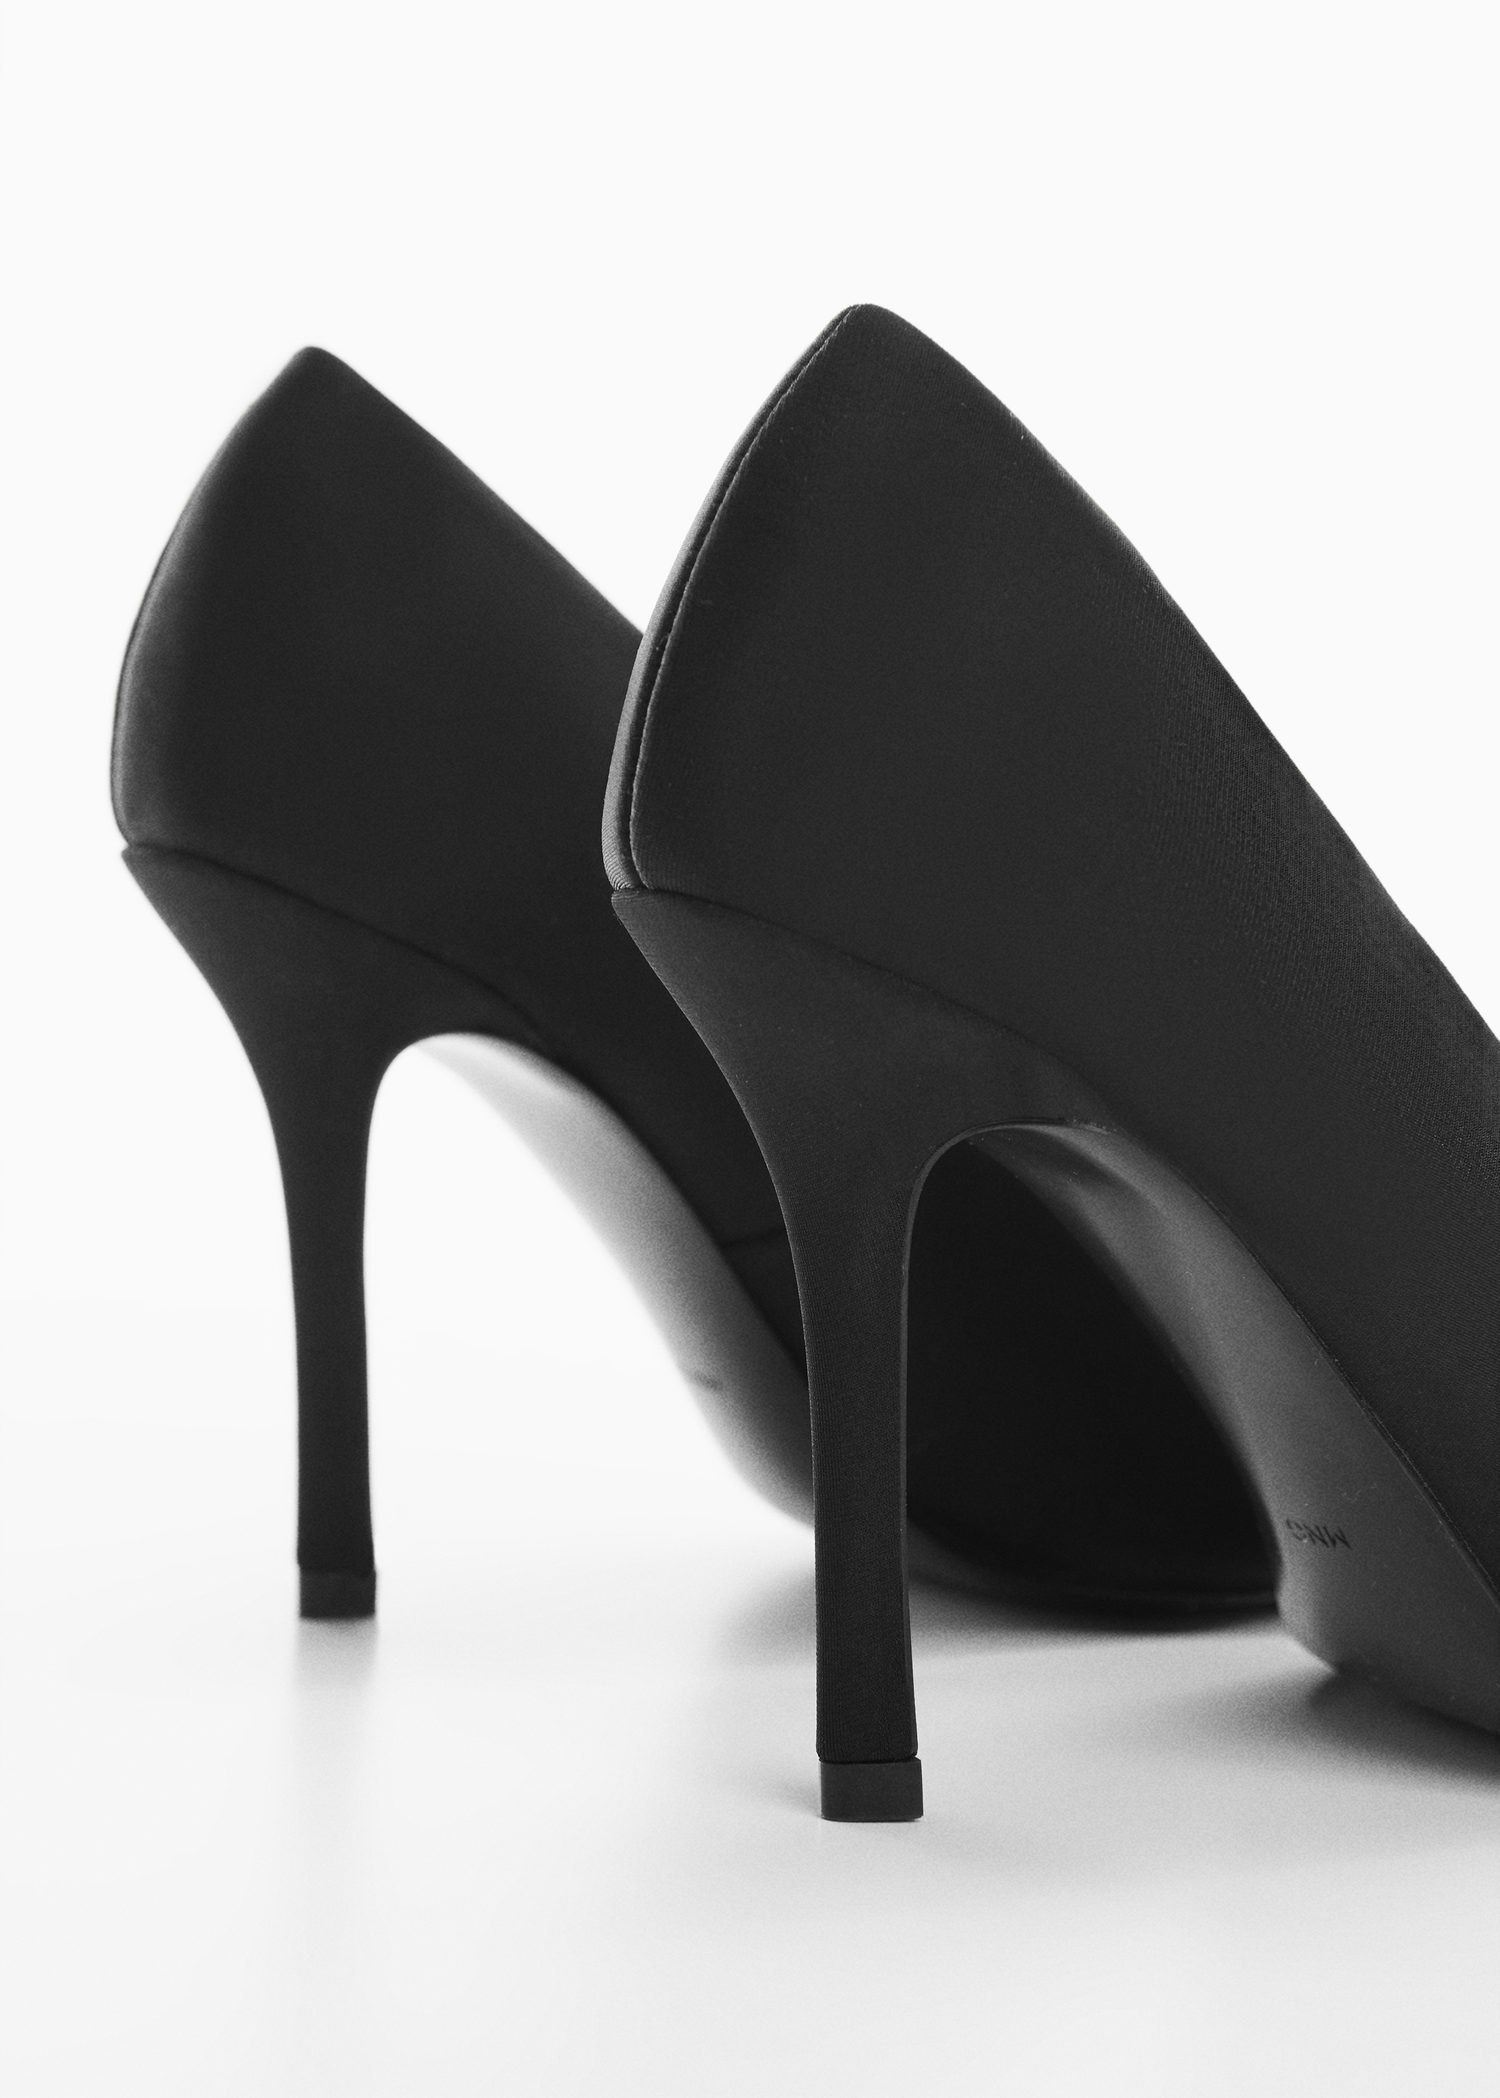 Vipkoala - Women Slingback Heels Club Pointed Toe Stiletto High Heels Pumps  | High heels stilettos, High heel pumps, Pumps heels